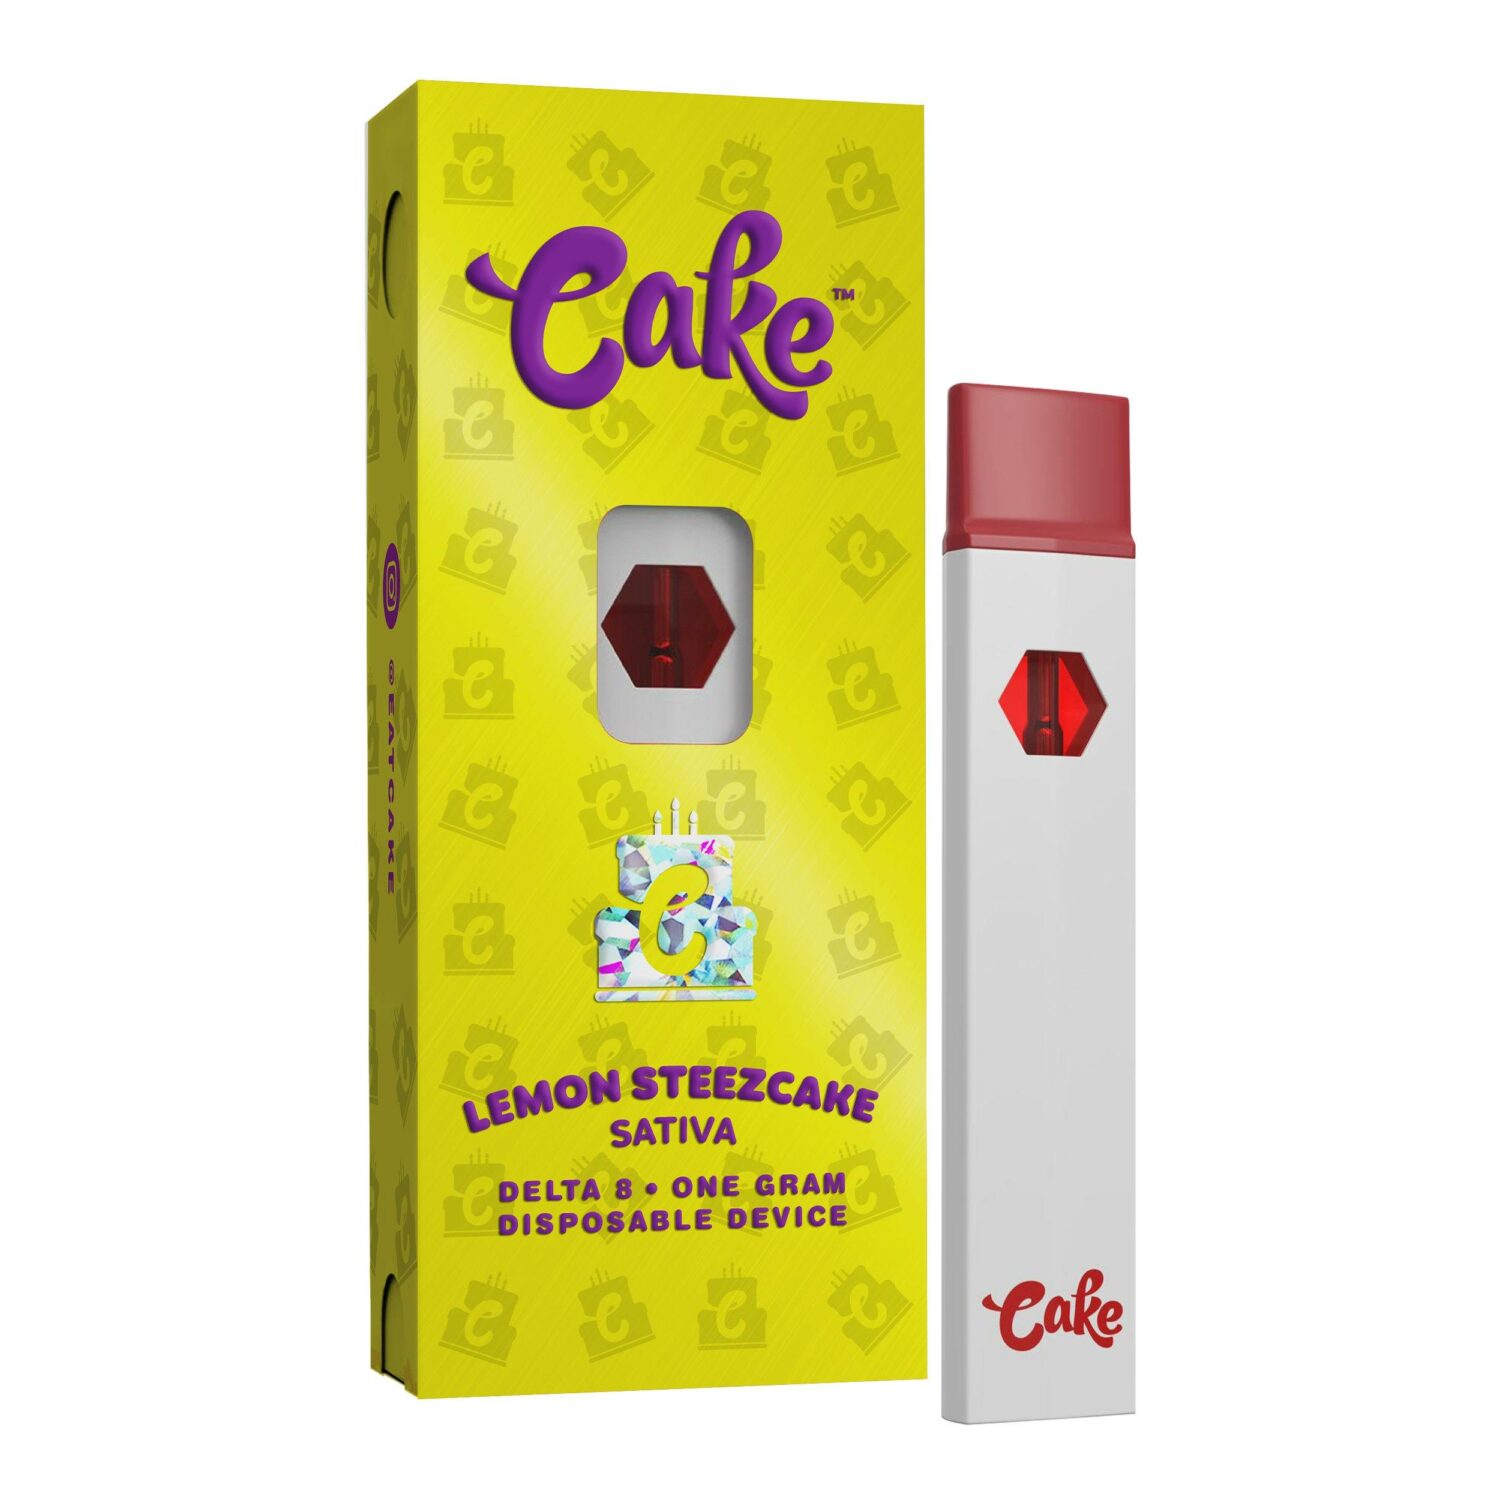 D8Gas-Delta-8-Cake-Disposable-Lemon-Steezcake-scaled-1.jpg